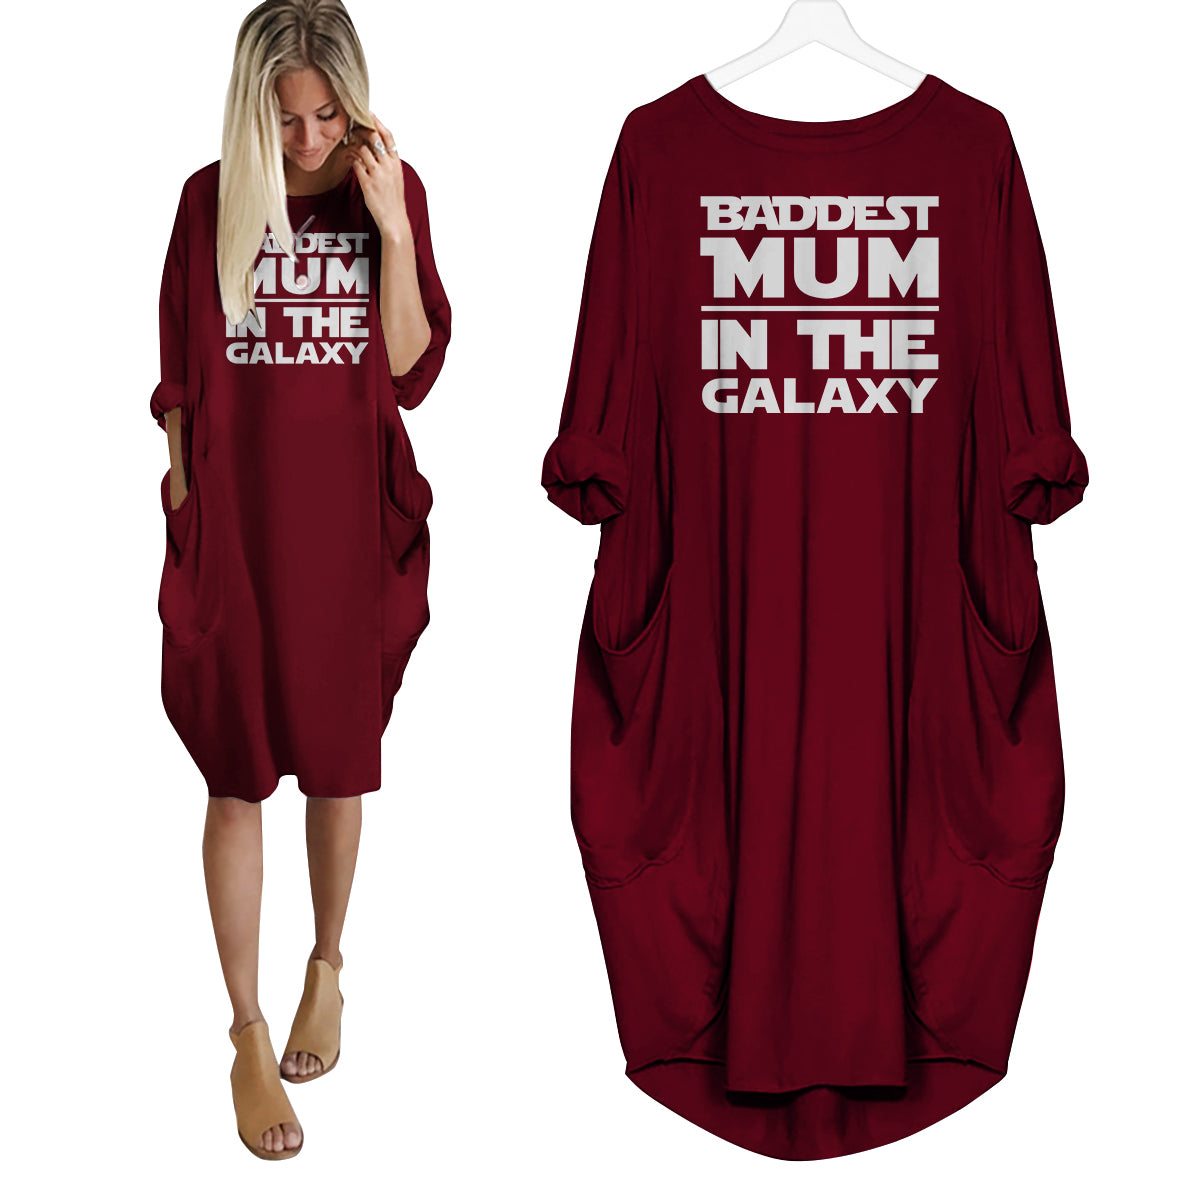 Baddest Mum In The Galaxy Dress